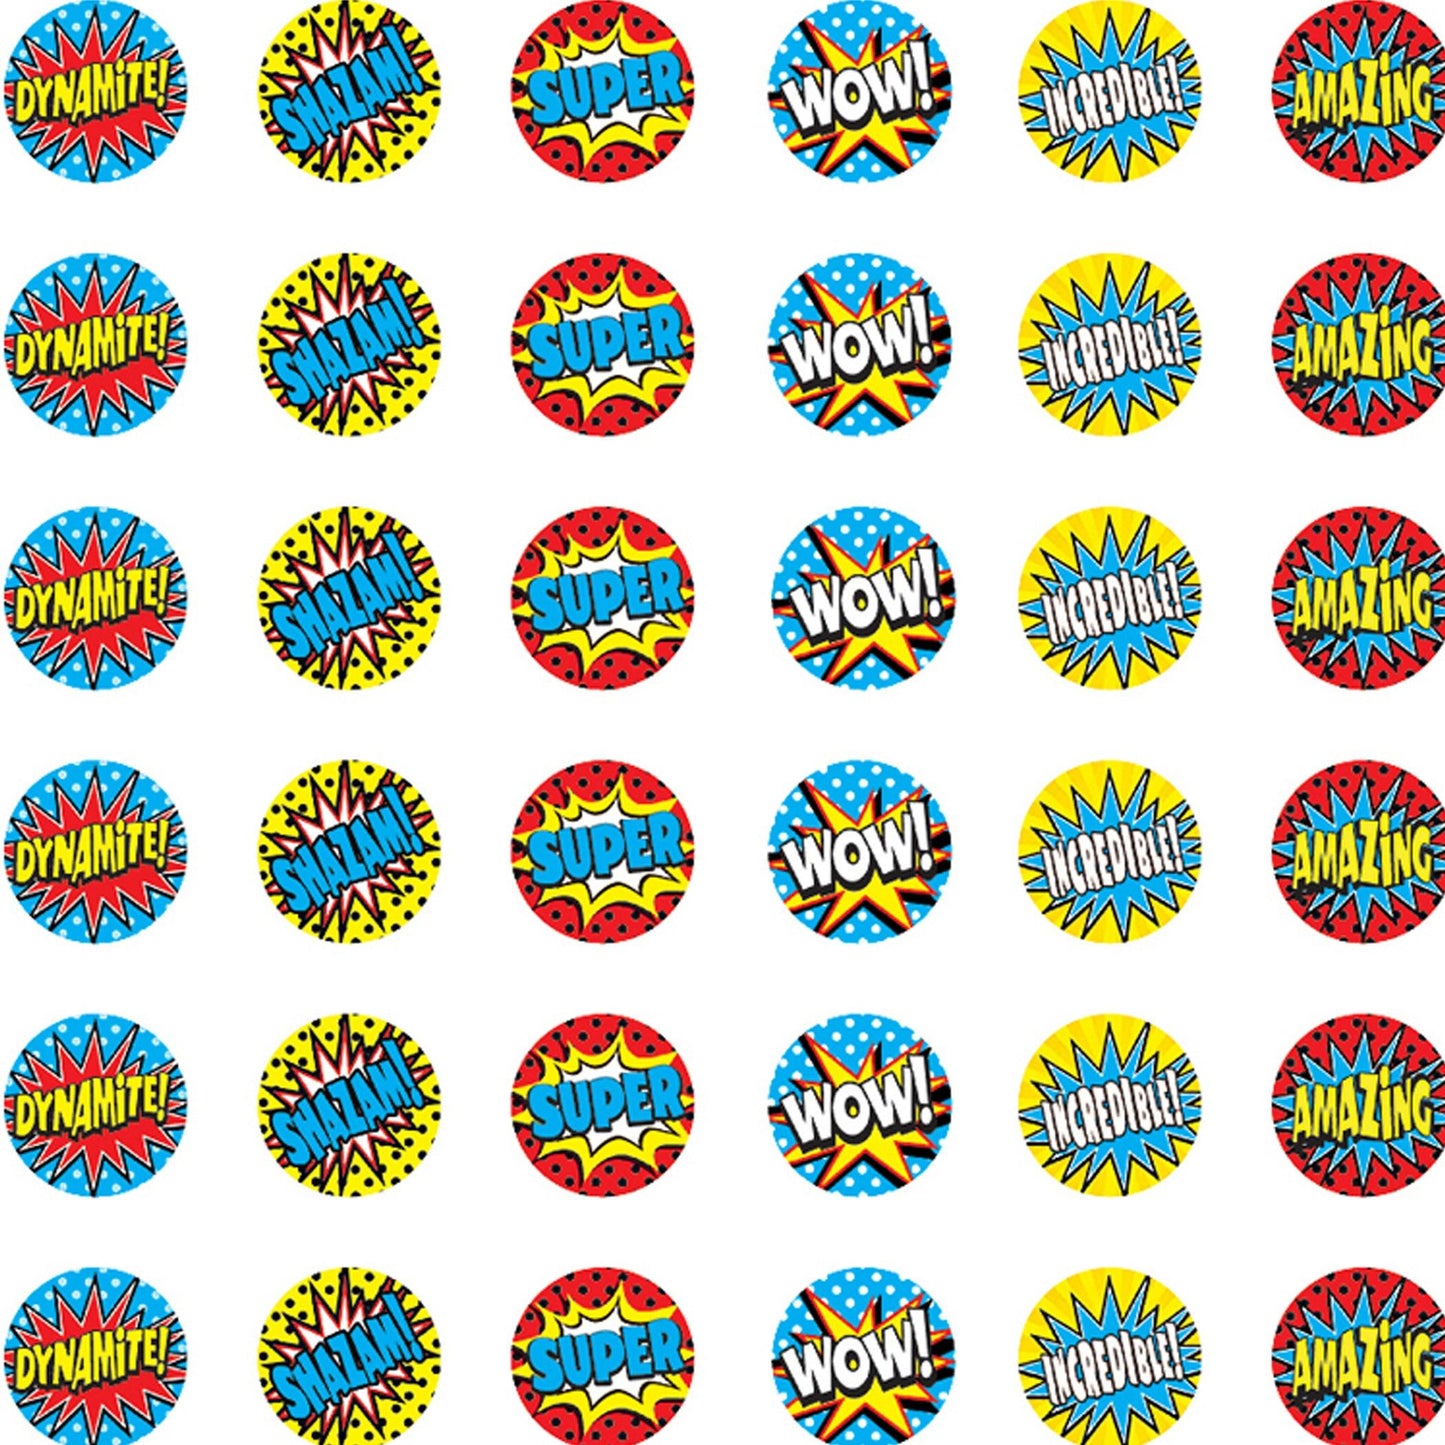 Superhero Mini Stickers Valu-Pak, 1144 Per Pack, 6 Packs - Loomini